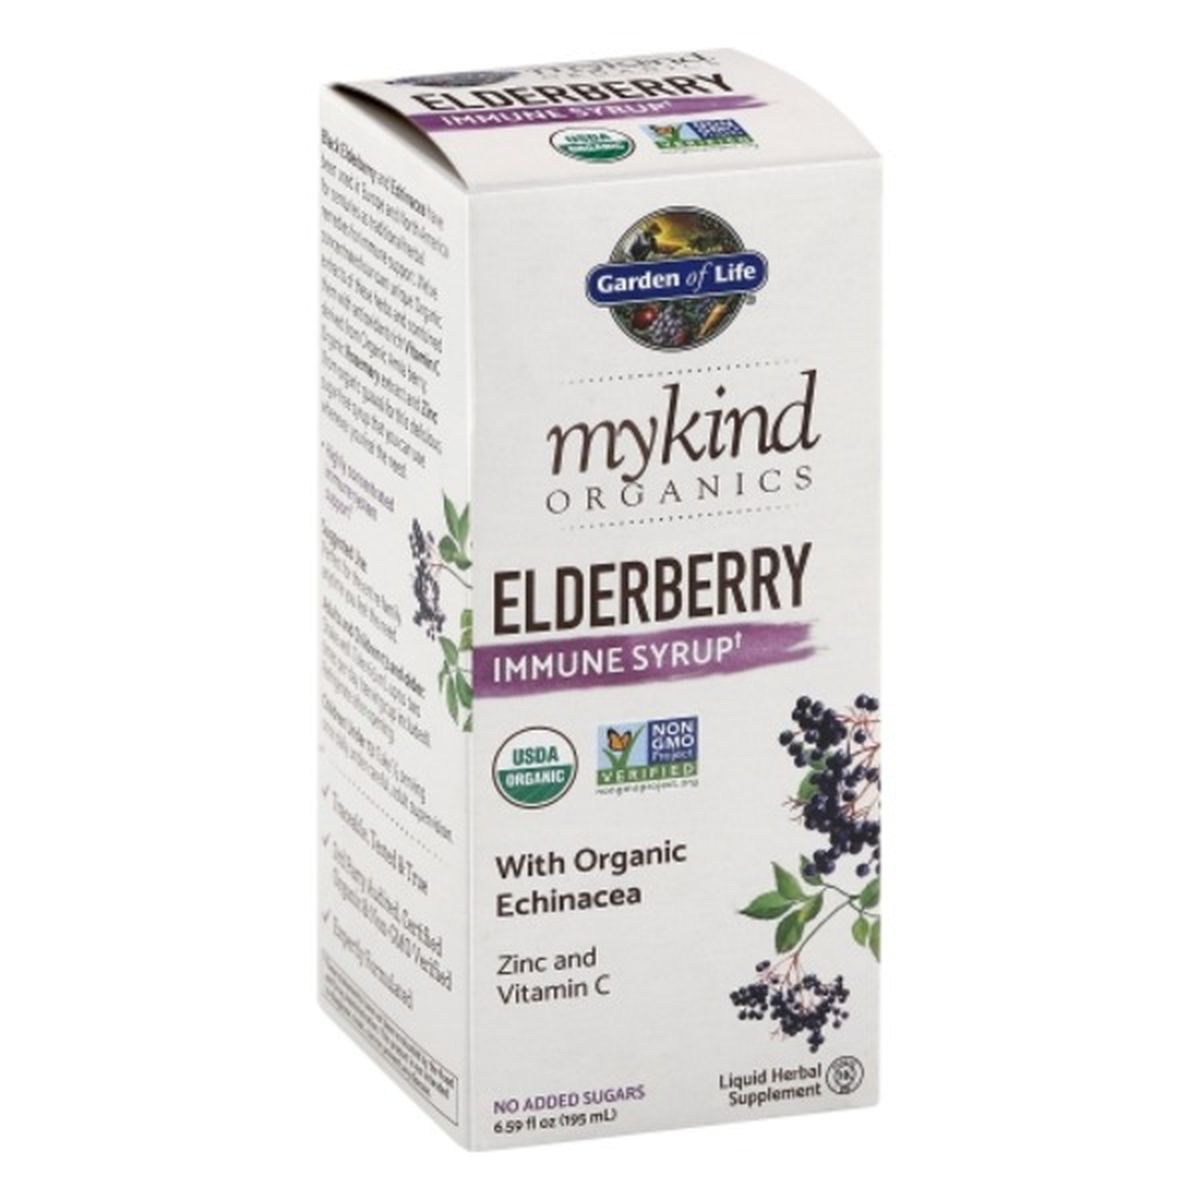 Calories in mykind Organics Immune Syrup, Liquid, Elderberry